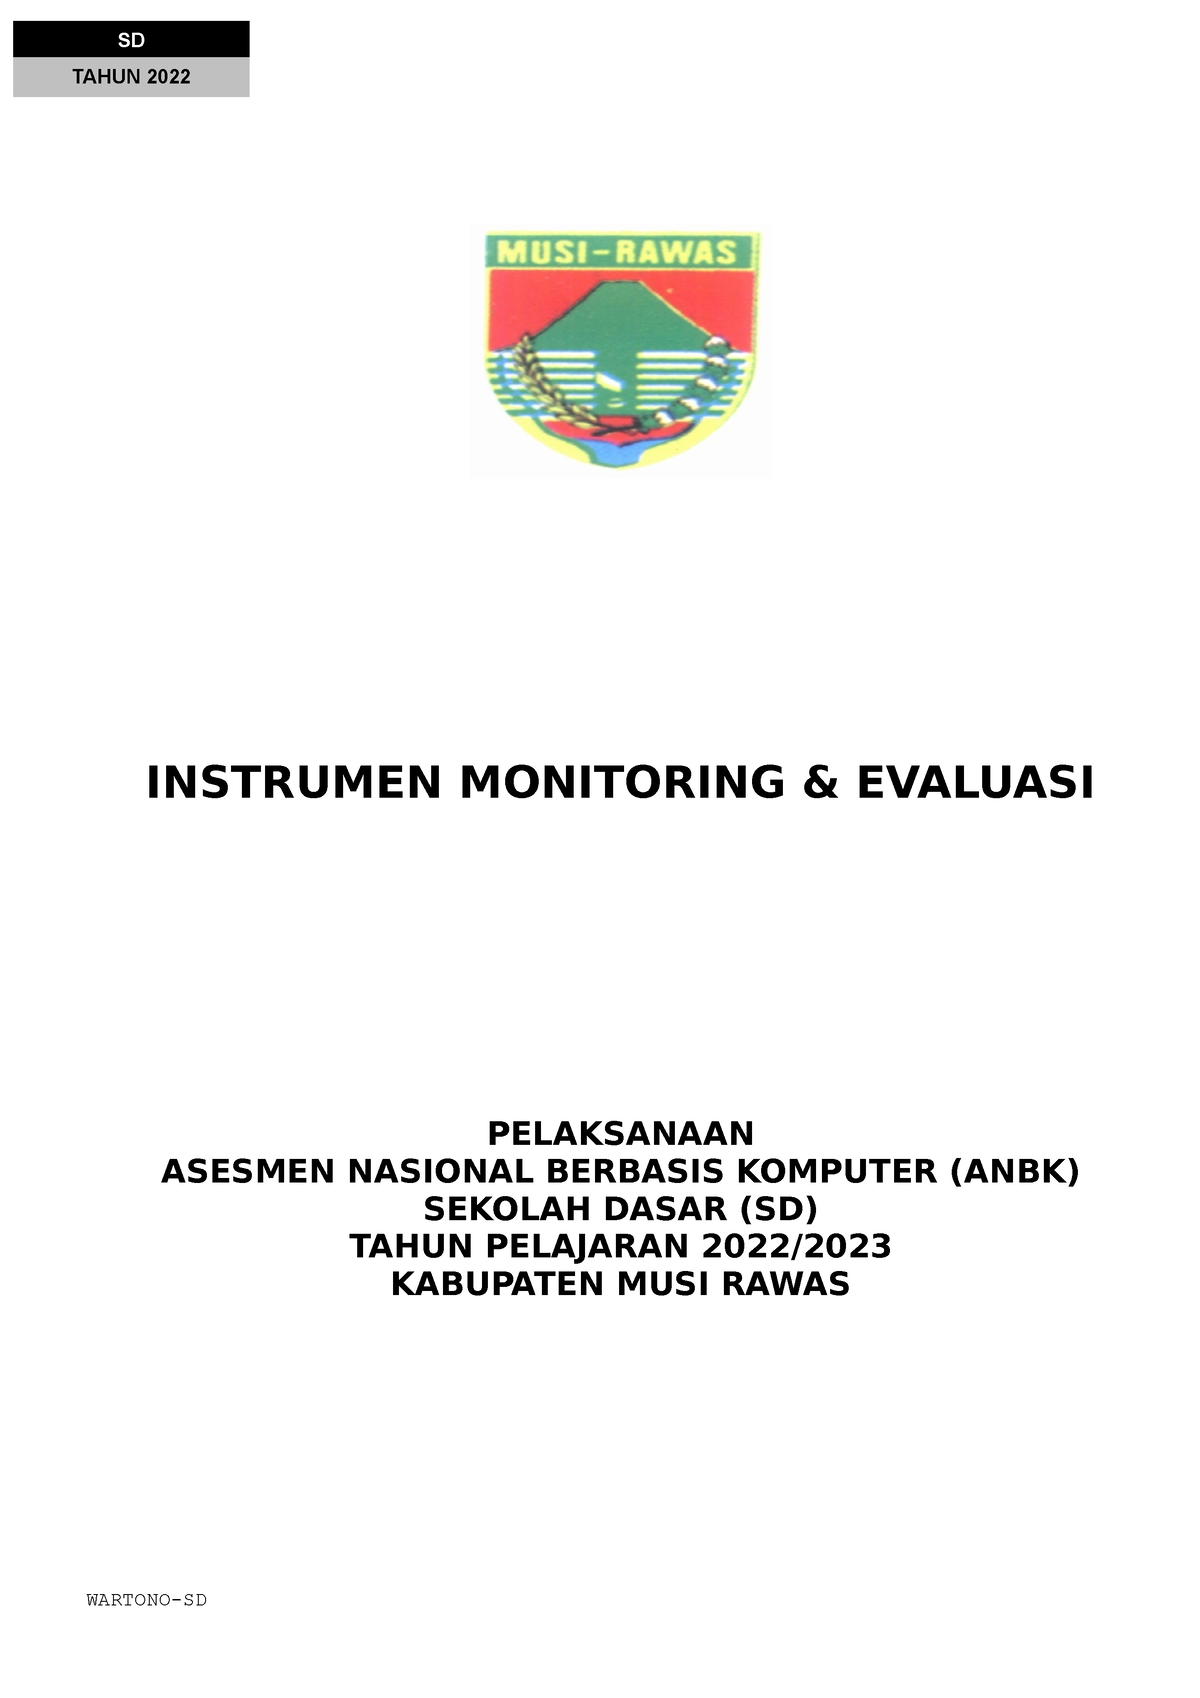 Instrumen Anbk 2022 Mura Instrumen Monitoring And Evaluasi Pelaksanaan Asesmen Nasional Berbasis 0958